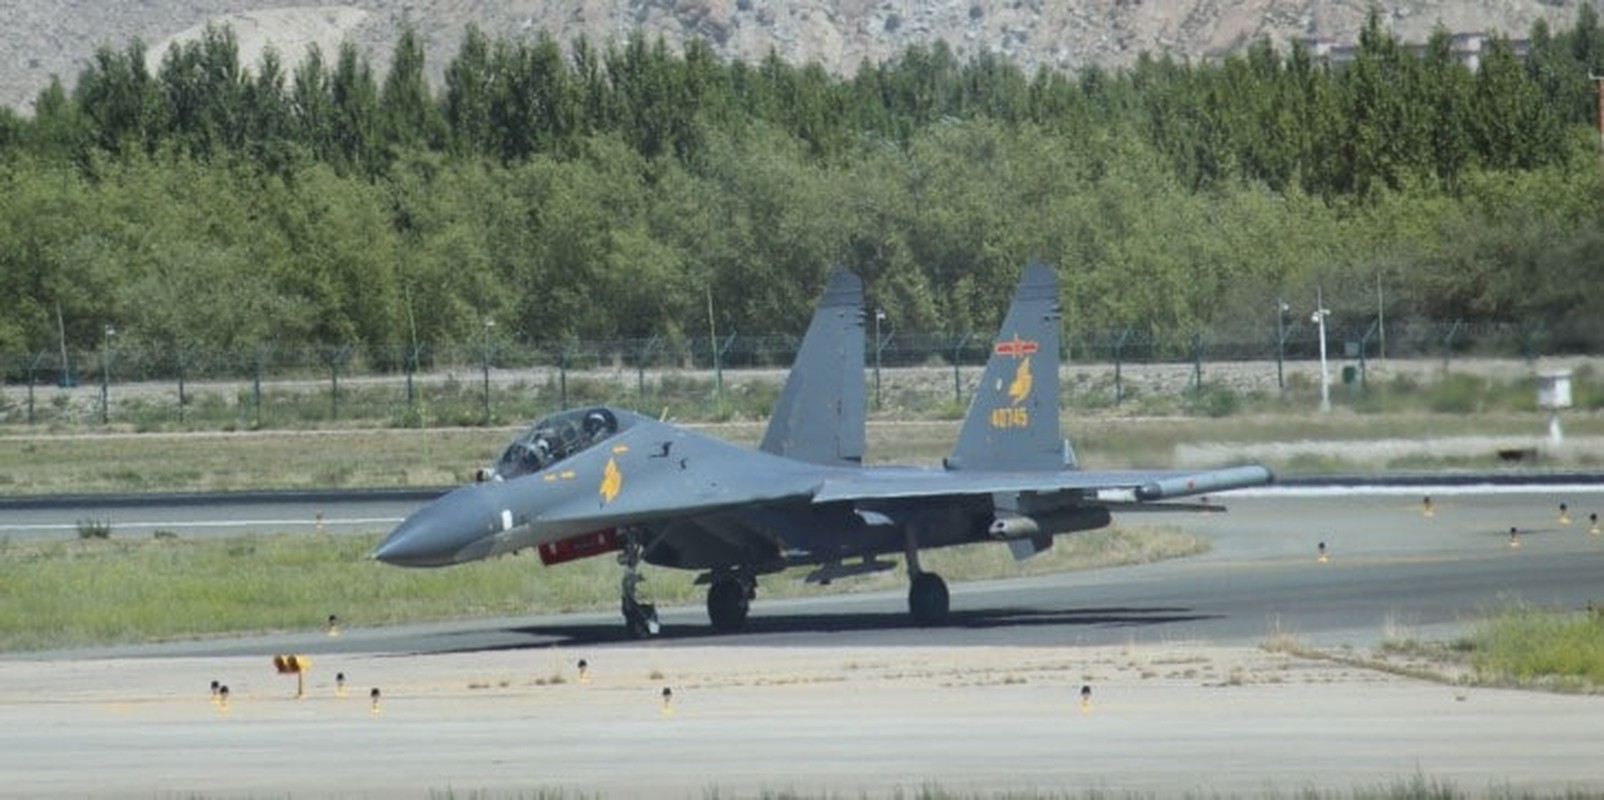 Trung Quoc khoe J-11 khien Nga phai hoi han vi trot ban Su-27-Hinh-7